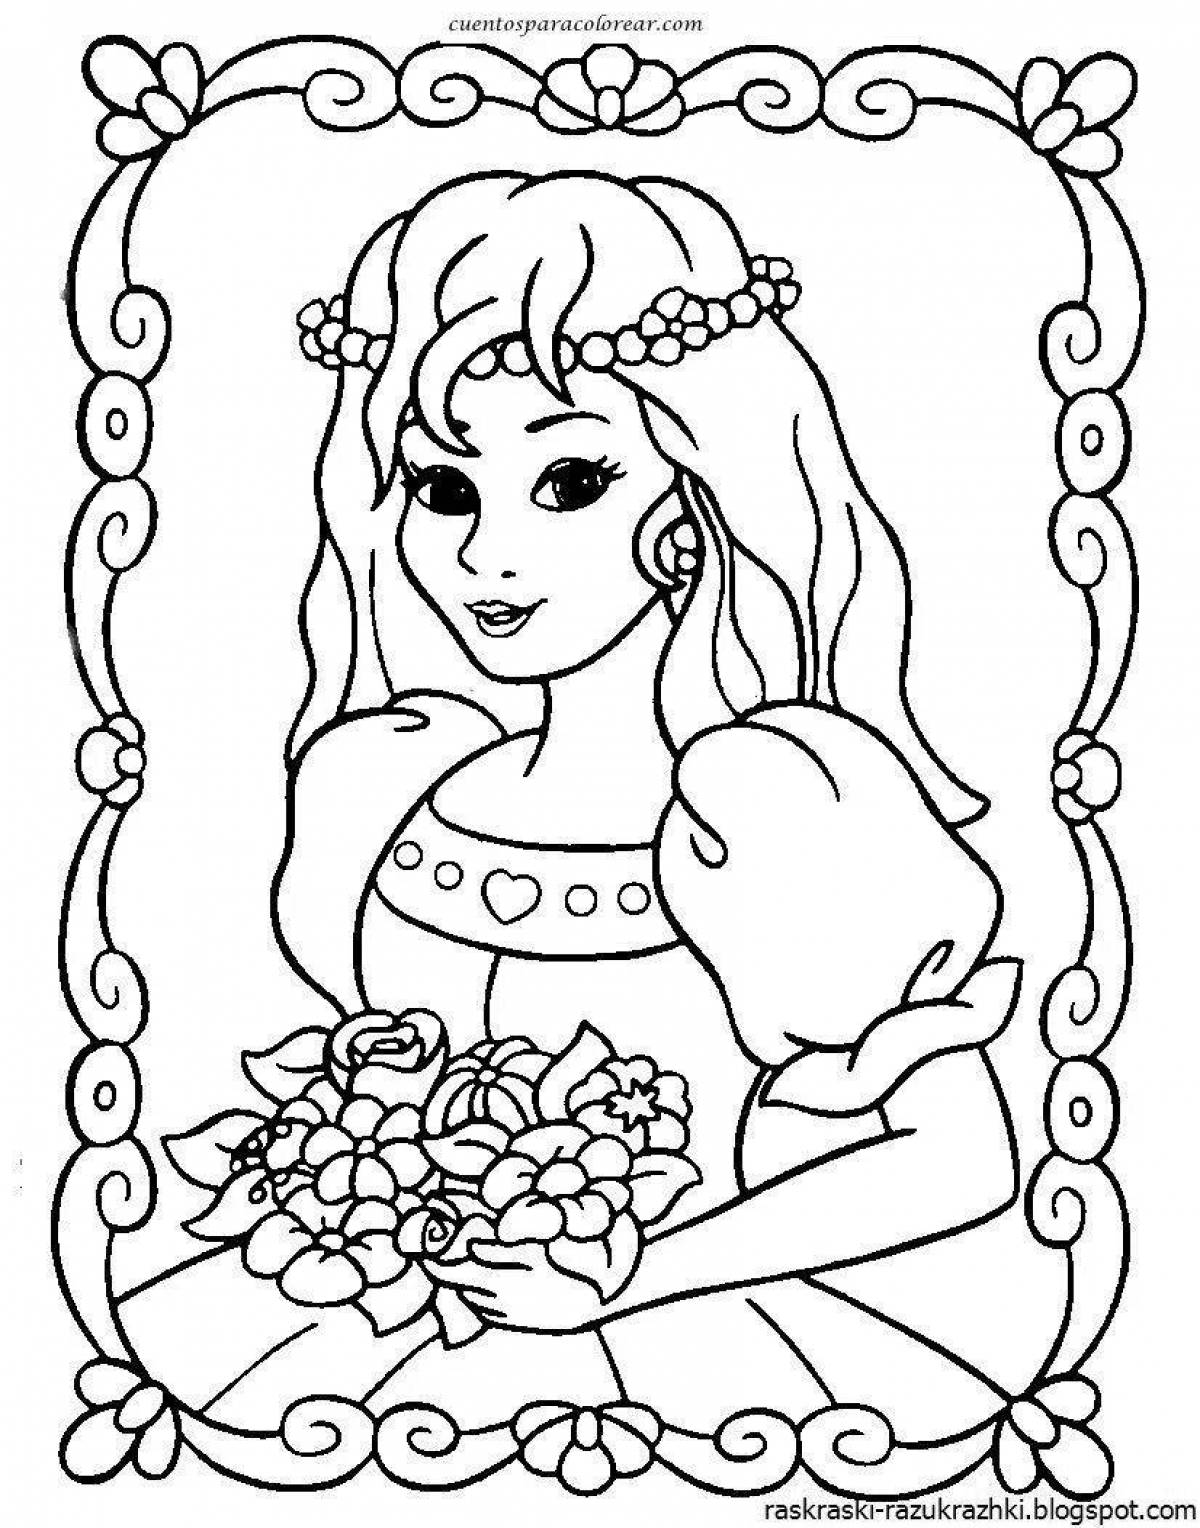 Elegant coloring drawing of a princess